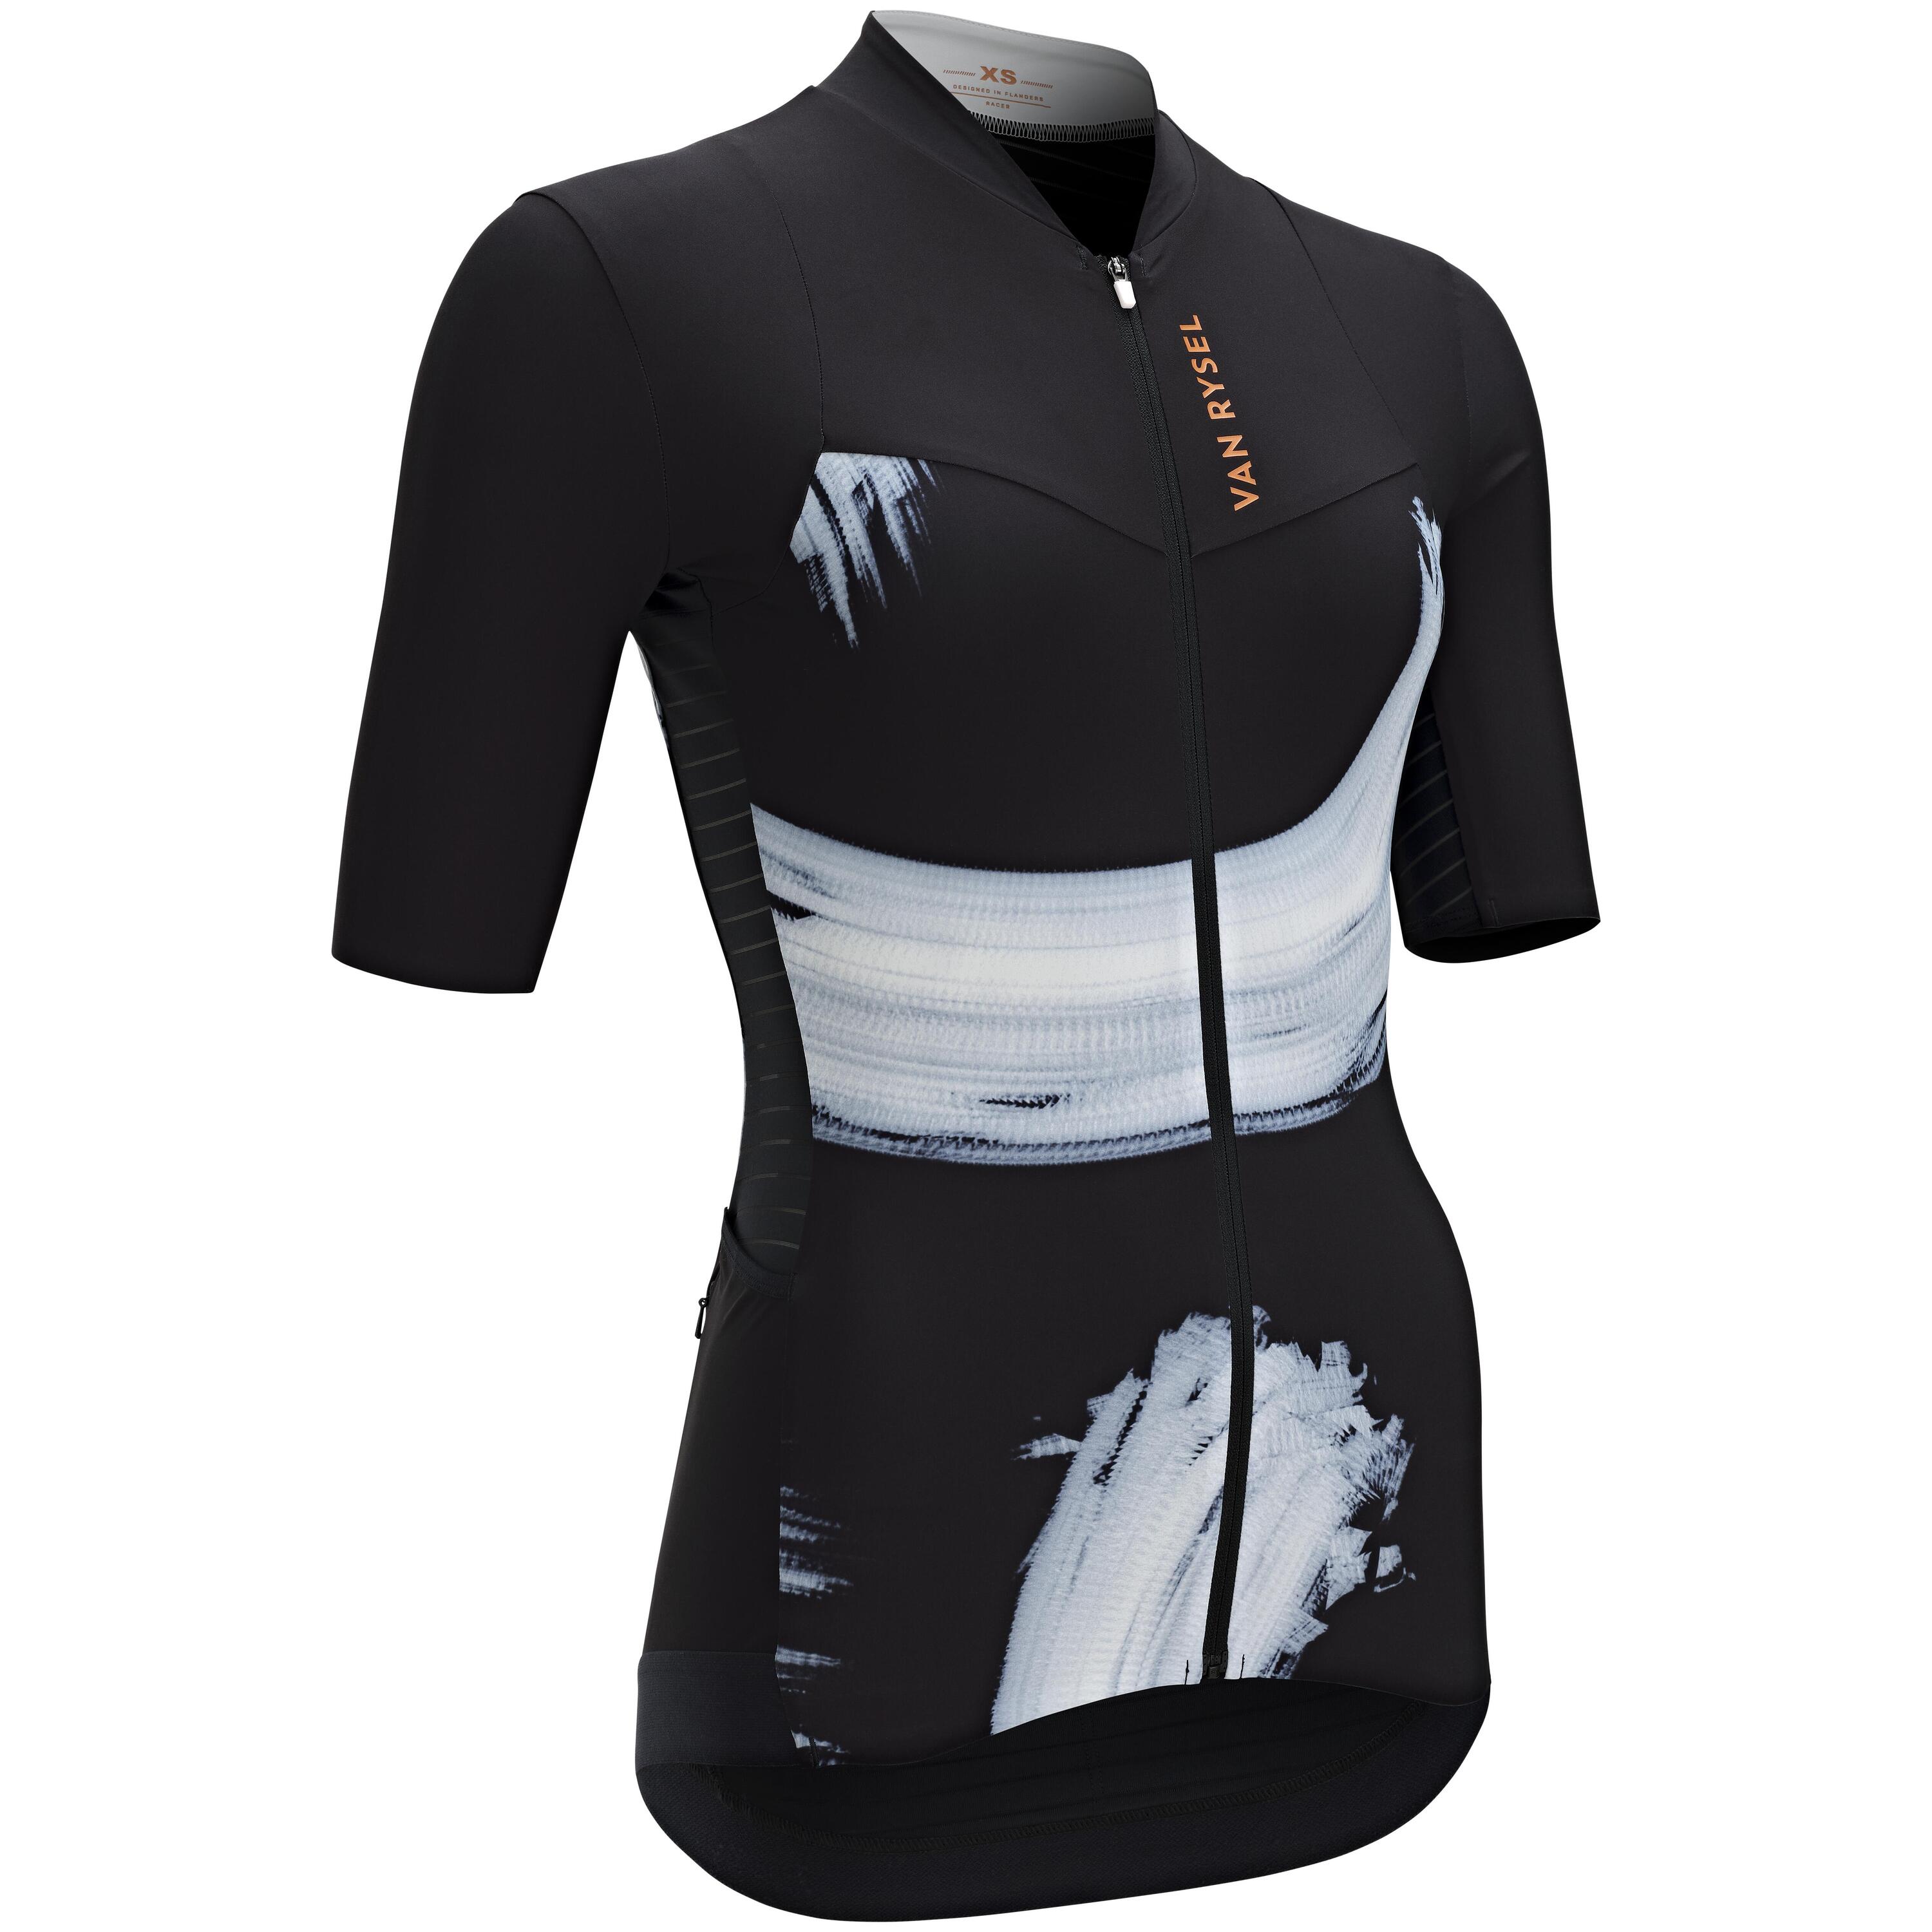 VAN RYSEL Women's Short-Sleeved Road Cycling Jersey Racer - Black Brush